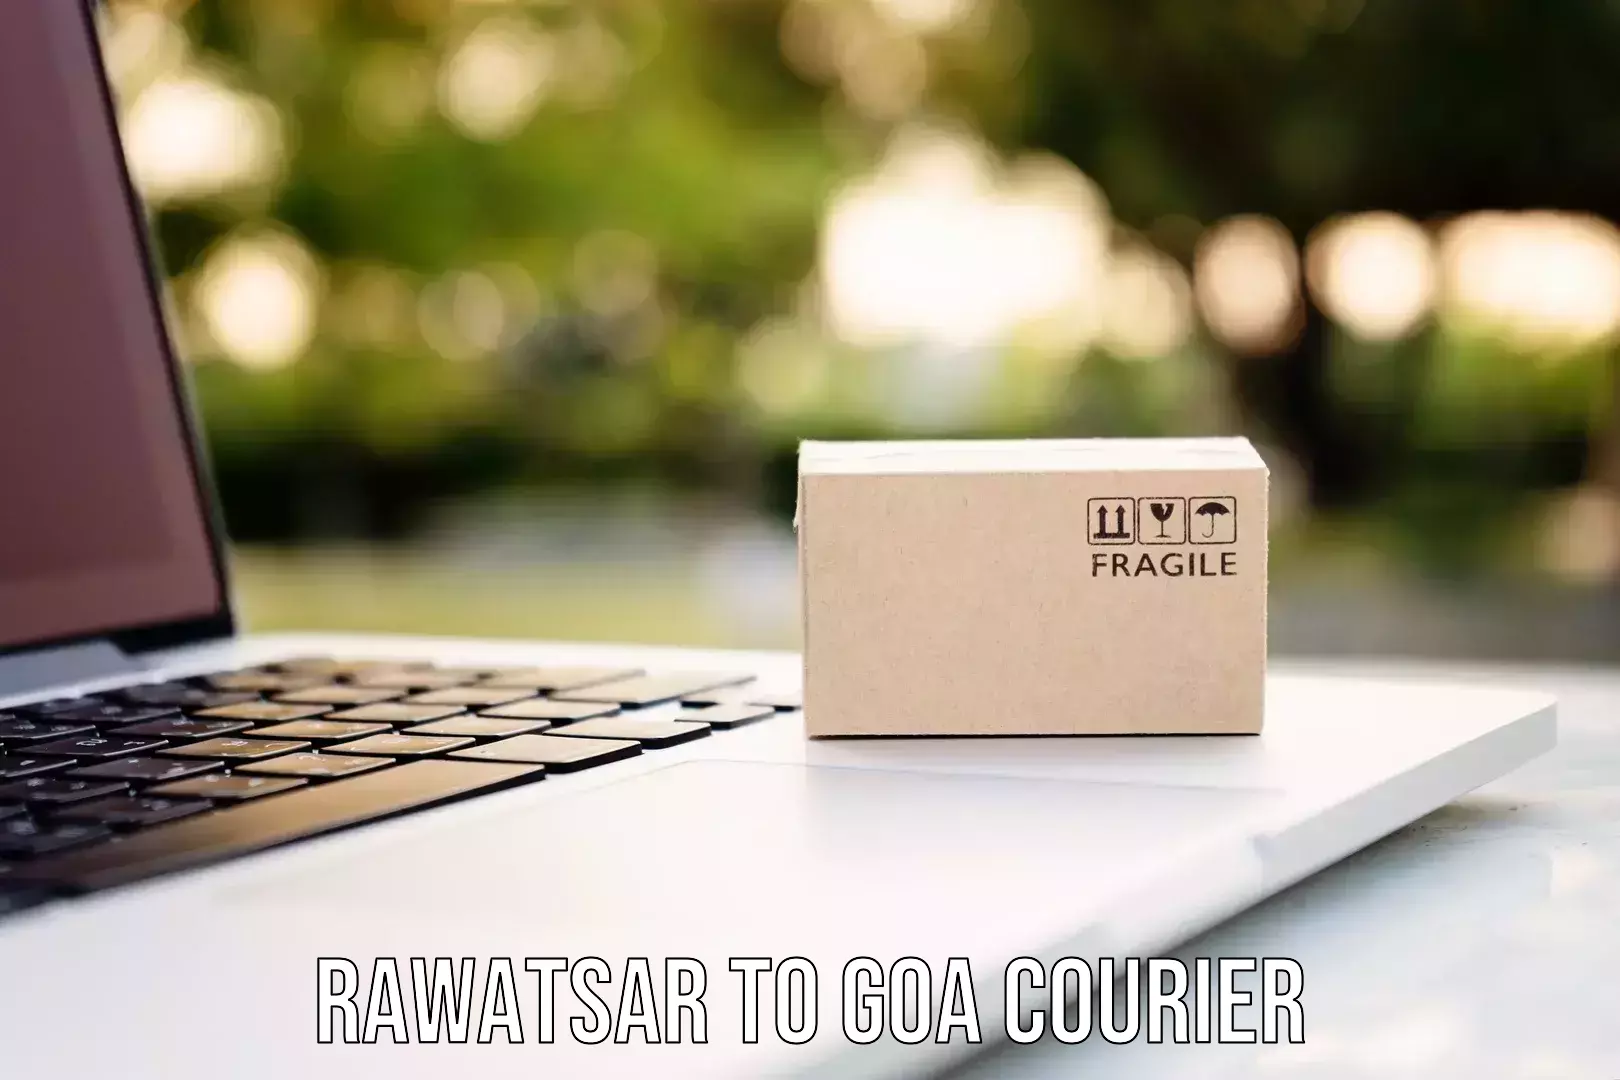 Courier service comparison Rawatsar to Panaji